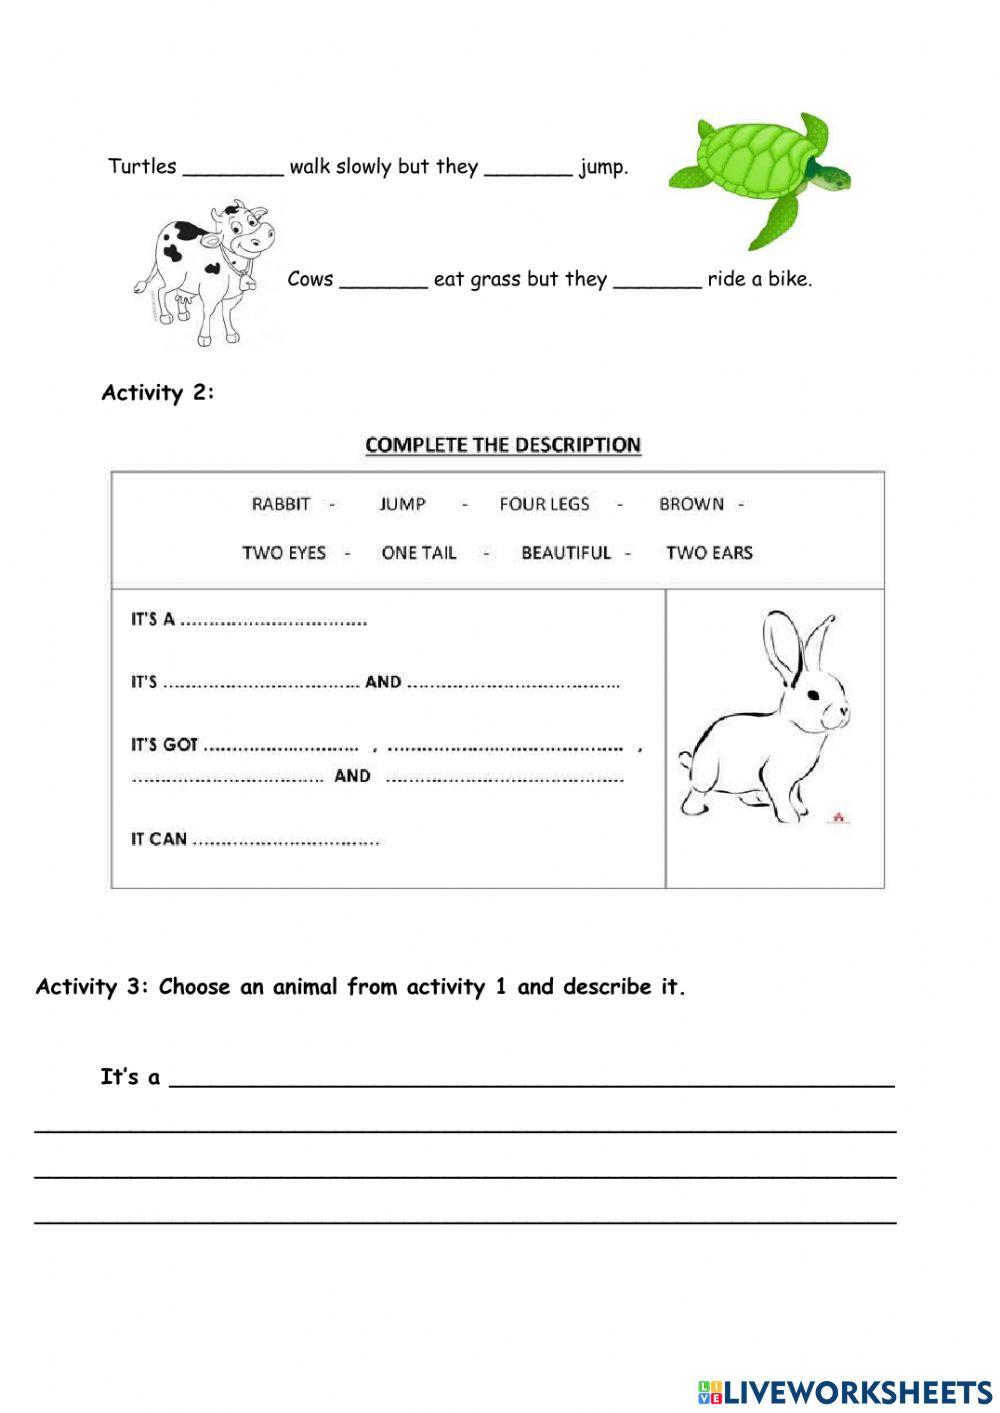 Animals 4th grade assessment